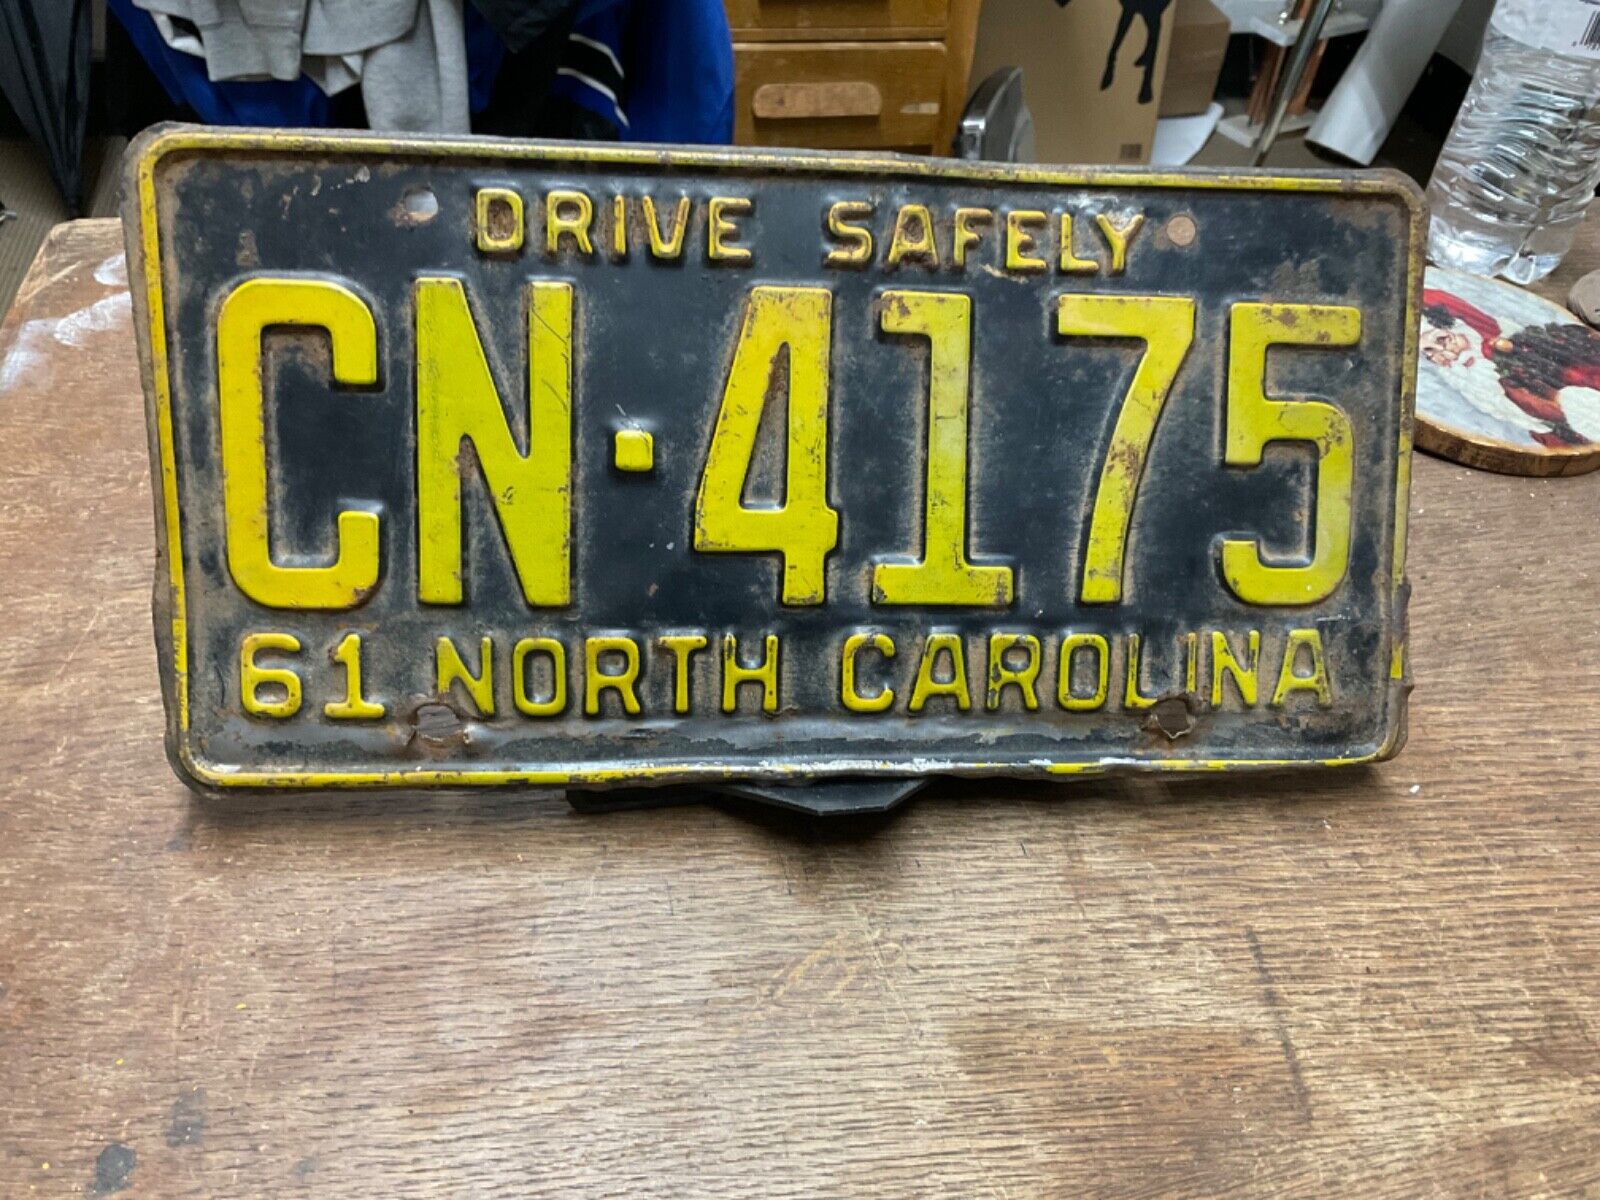 1961 North Carolina Plate CN 4175 Vintage Rustic